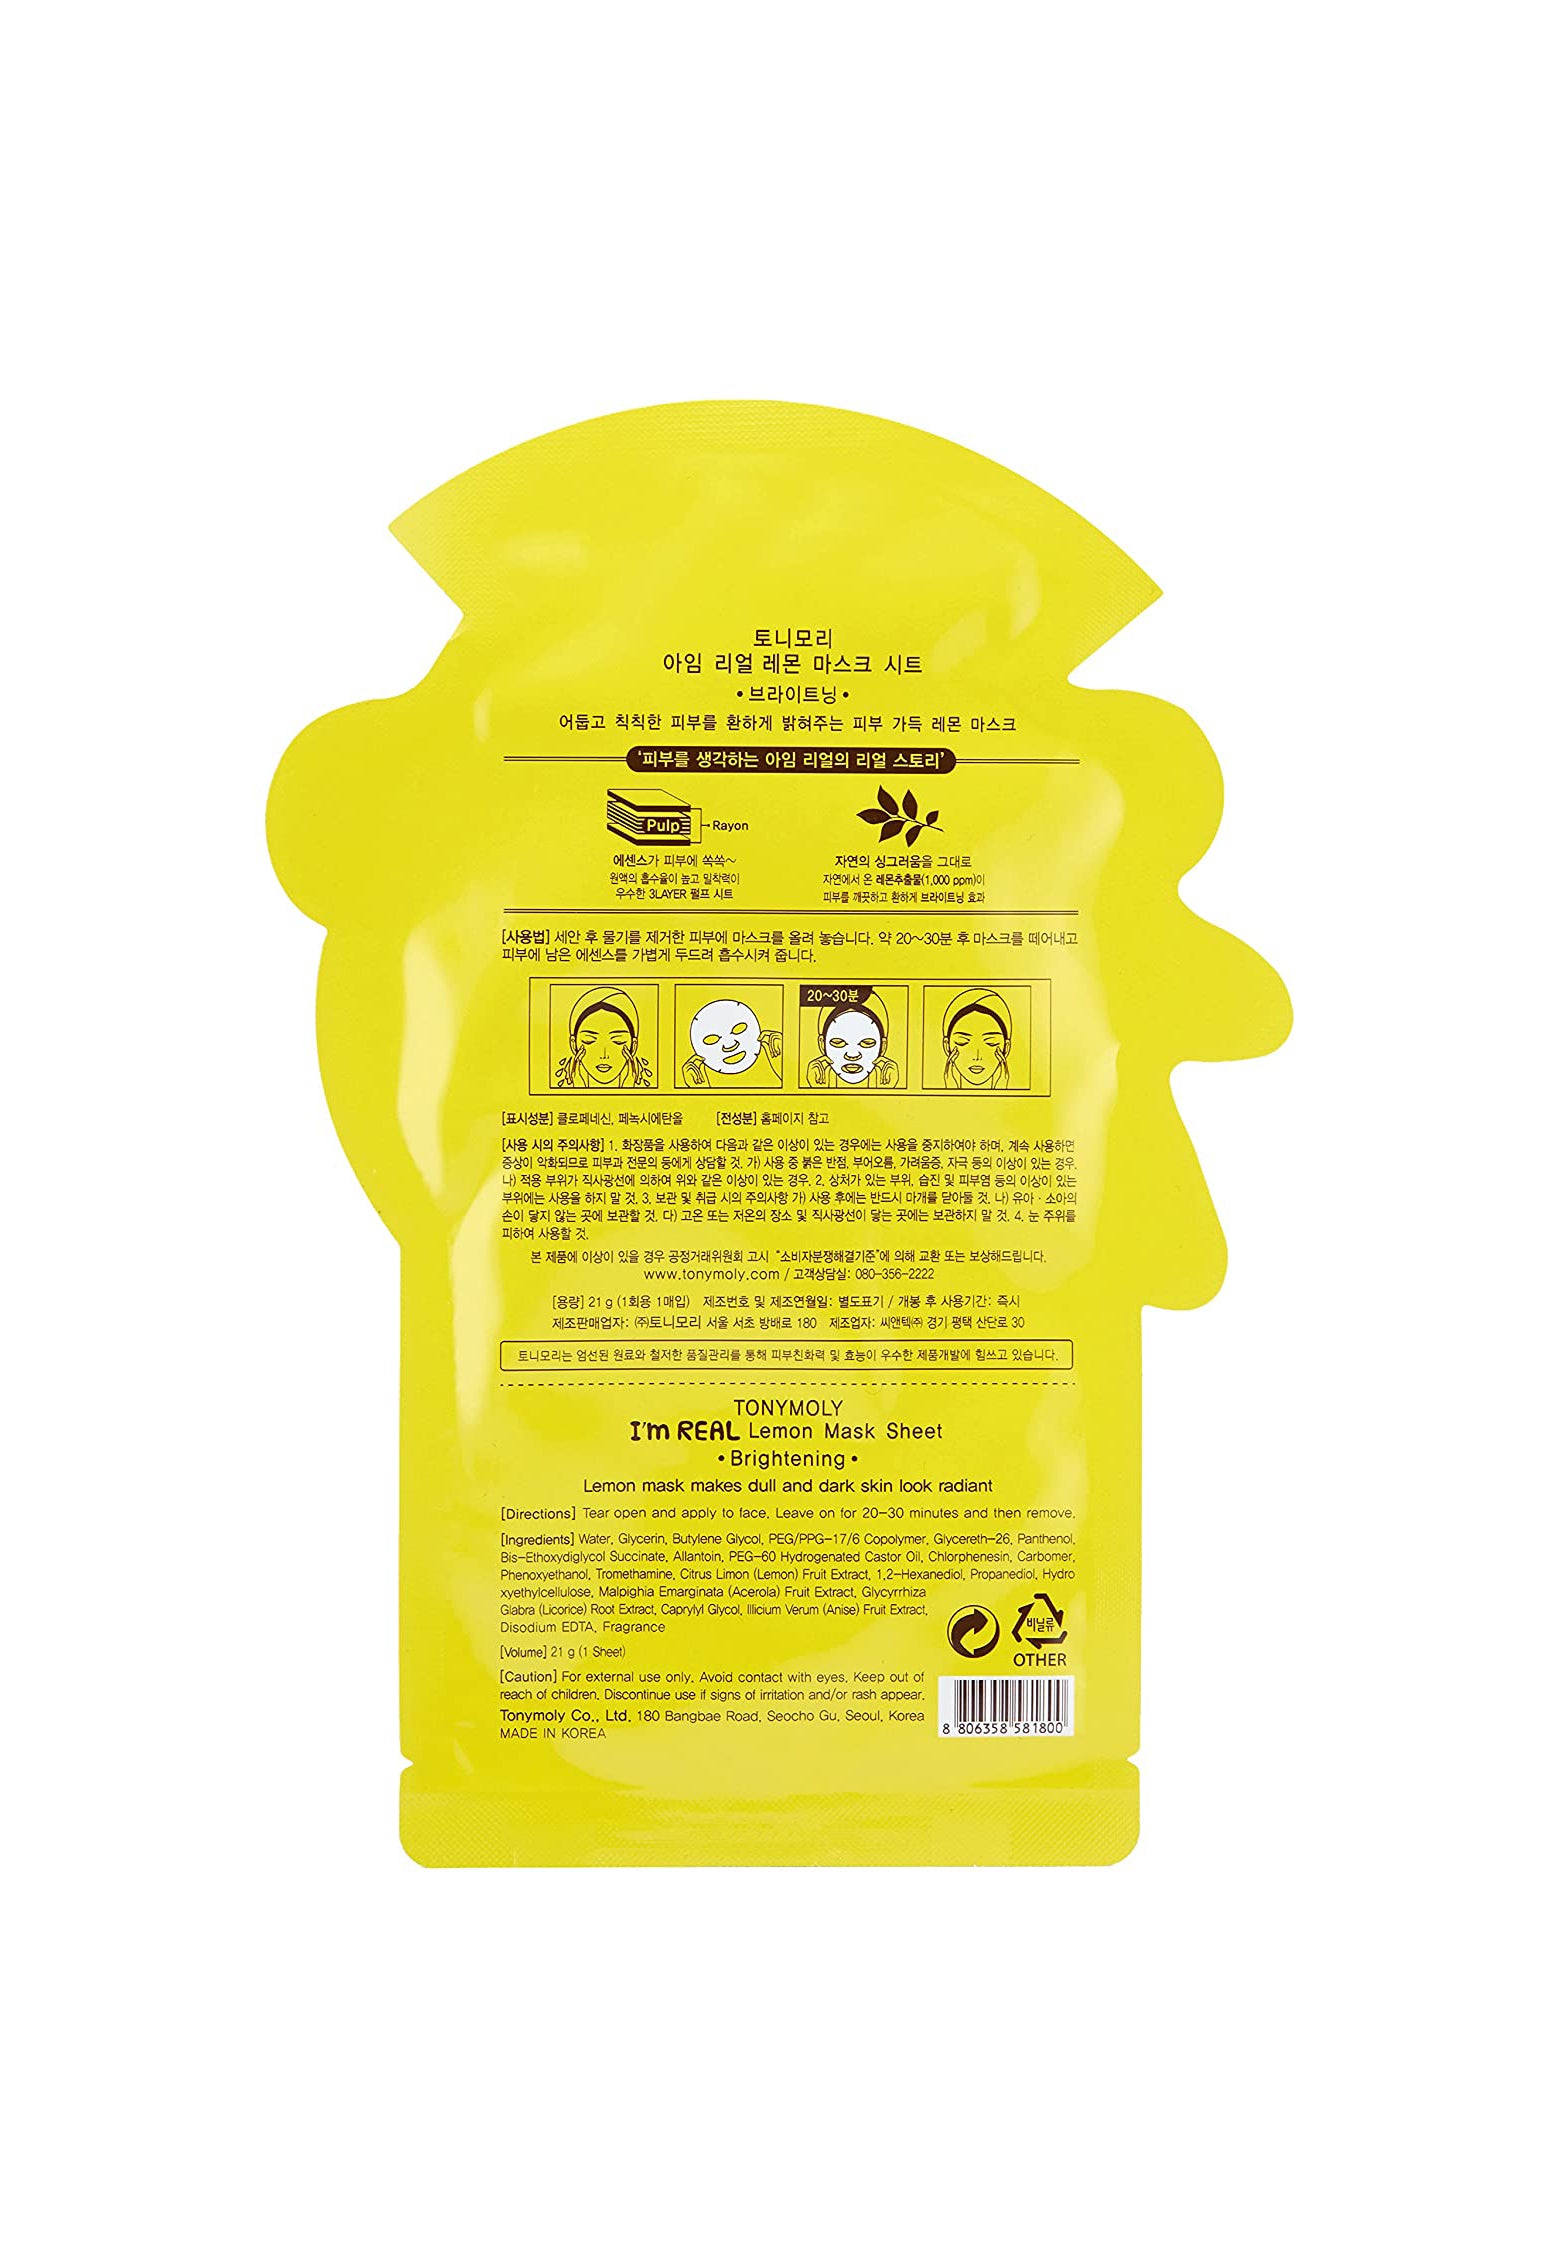 Tony Moly, I'm Lemon, Brightening Sheet Mask, 1 Sheet, (21 g)